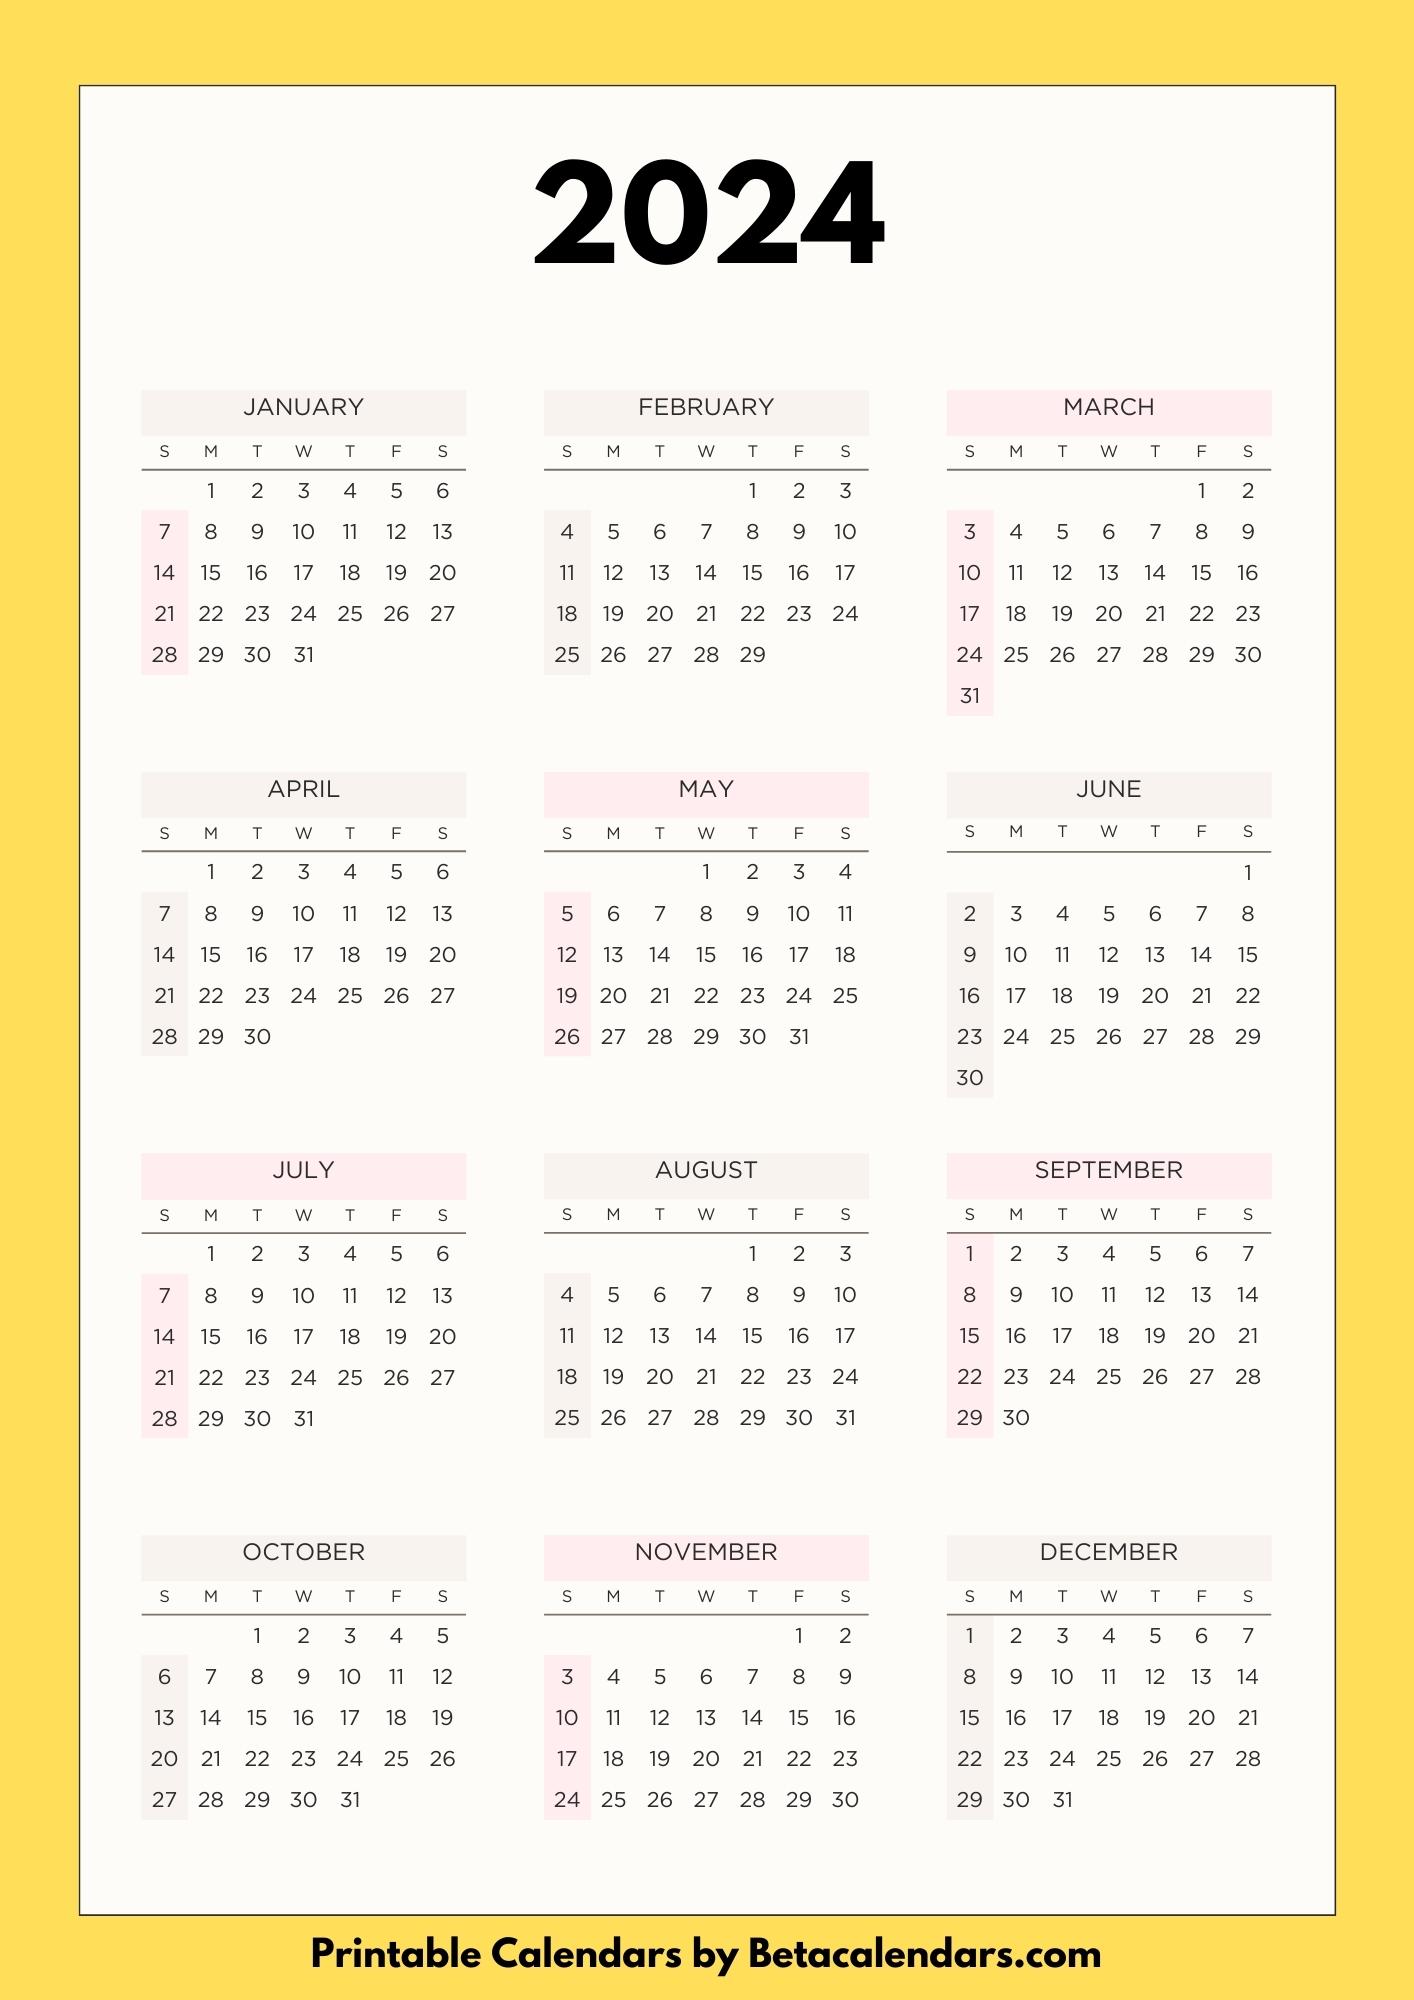 2024 Calendar - Beta Calendars